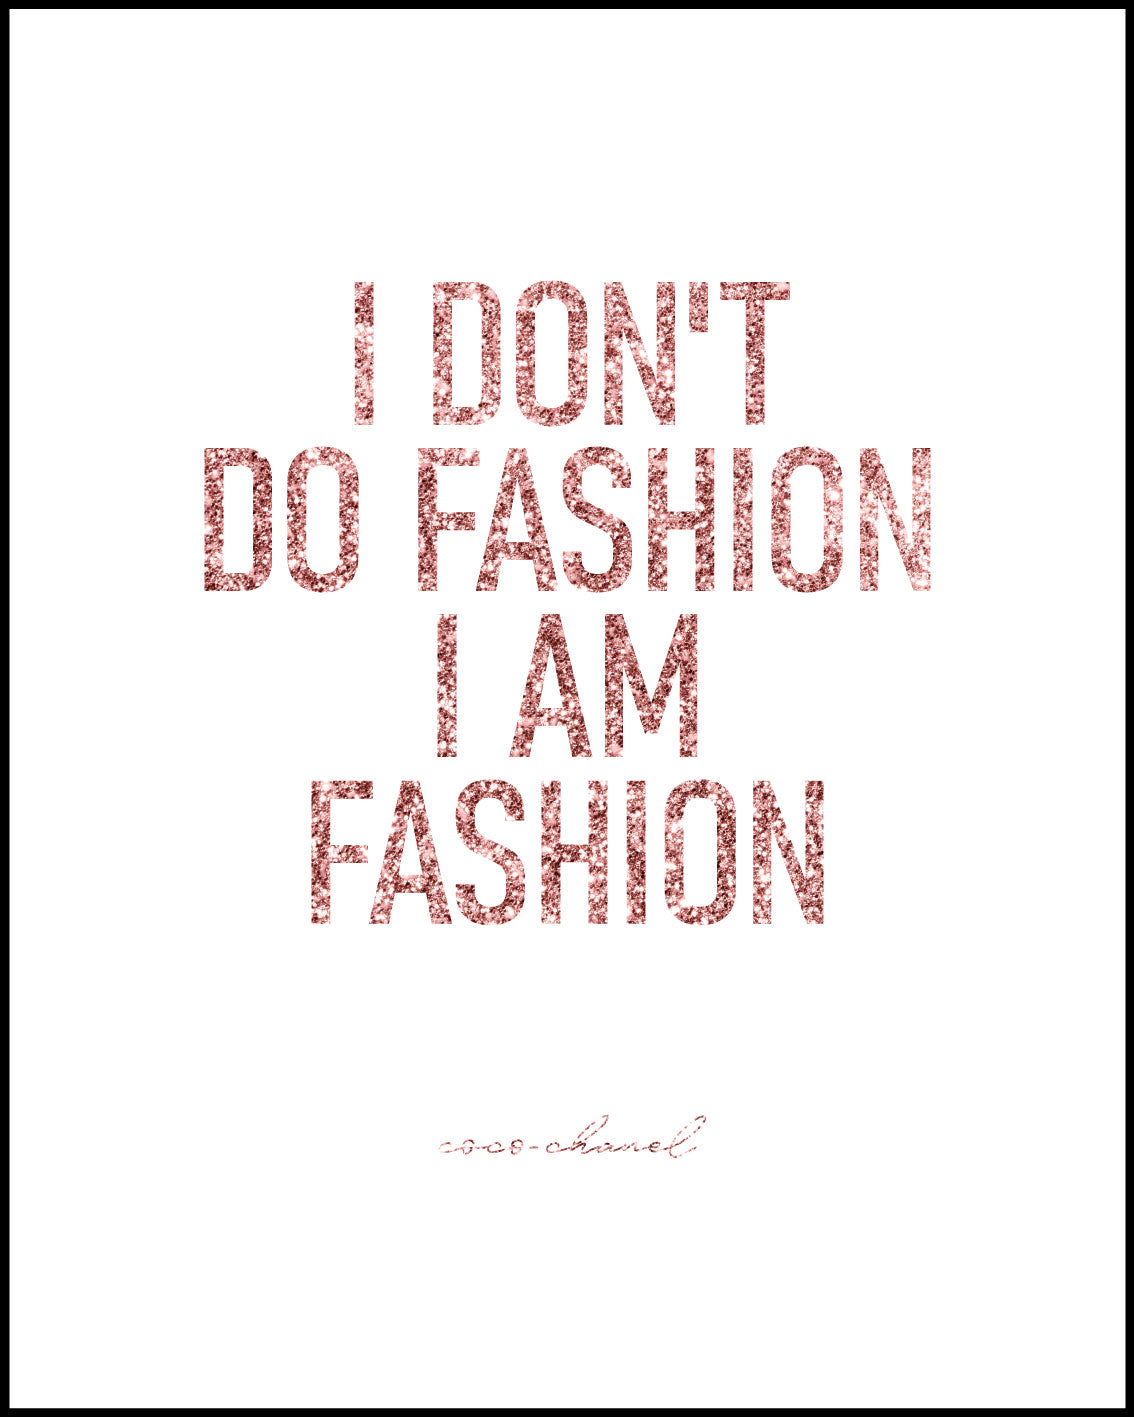 I don't do fashion I am fashion Poster